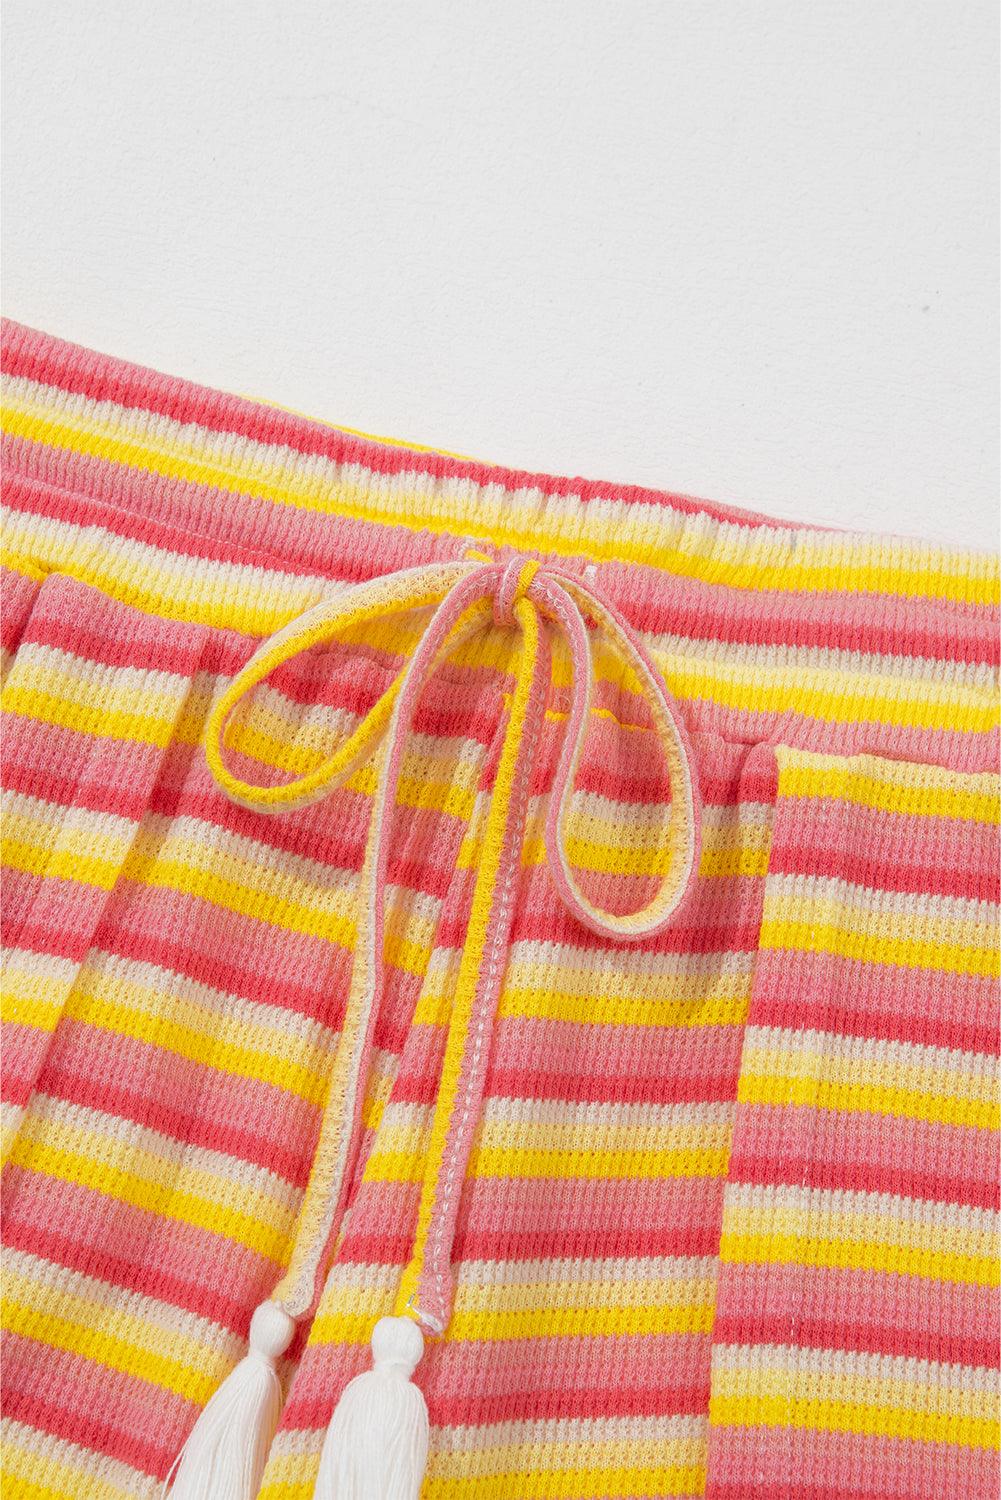 Yellow Stripe Rainbow Tee Tasseled String Wide Leg Pants Set - L & M Kee, LLC